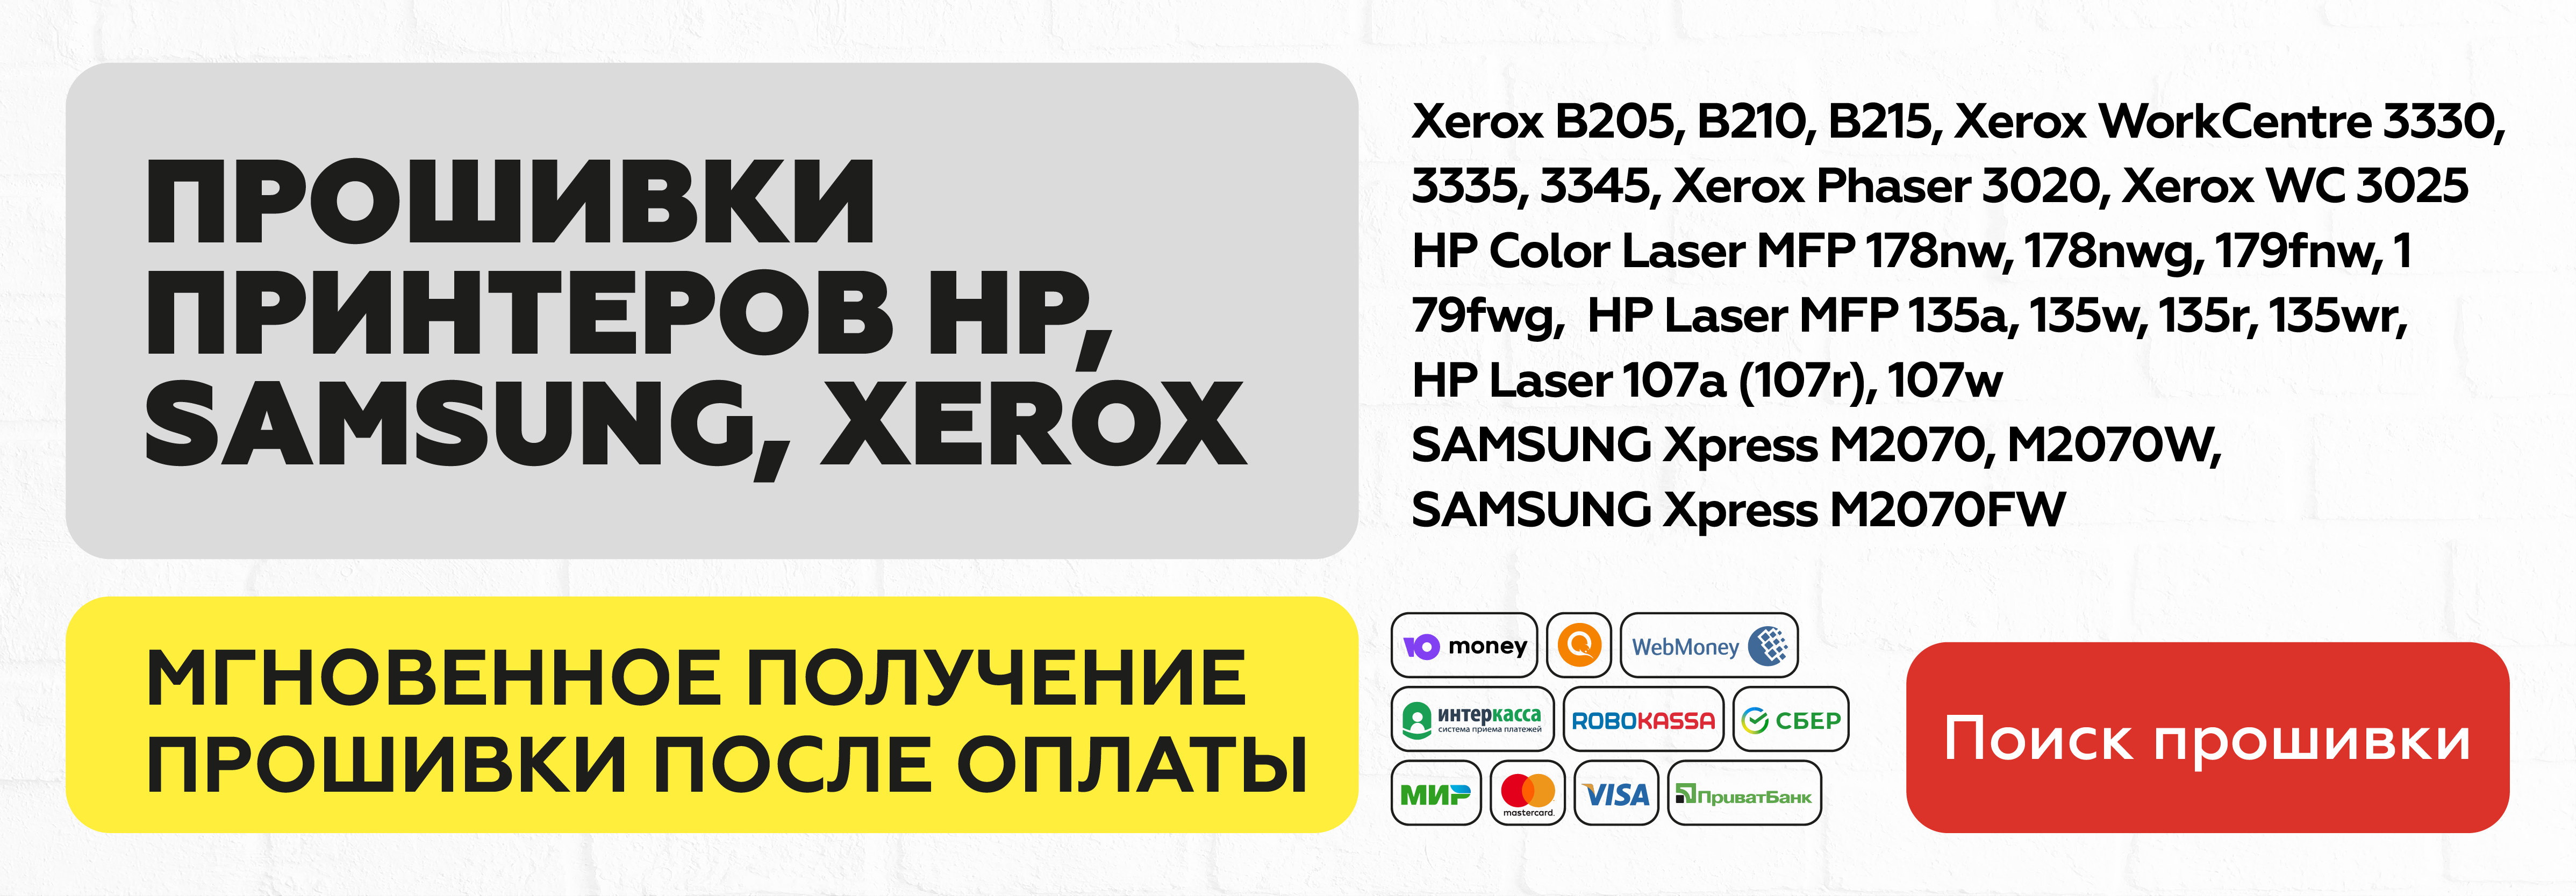 Фикс прошивка для принтеров Samsung, Xerox, Dell